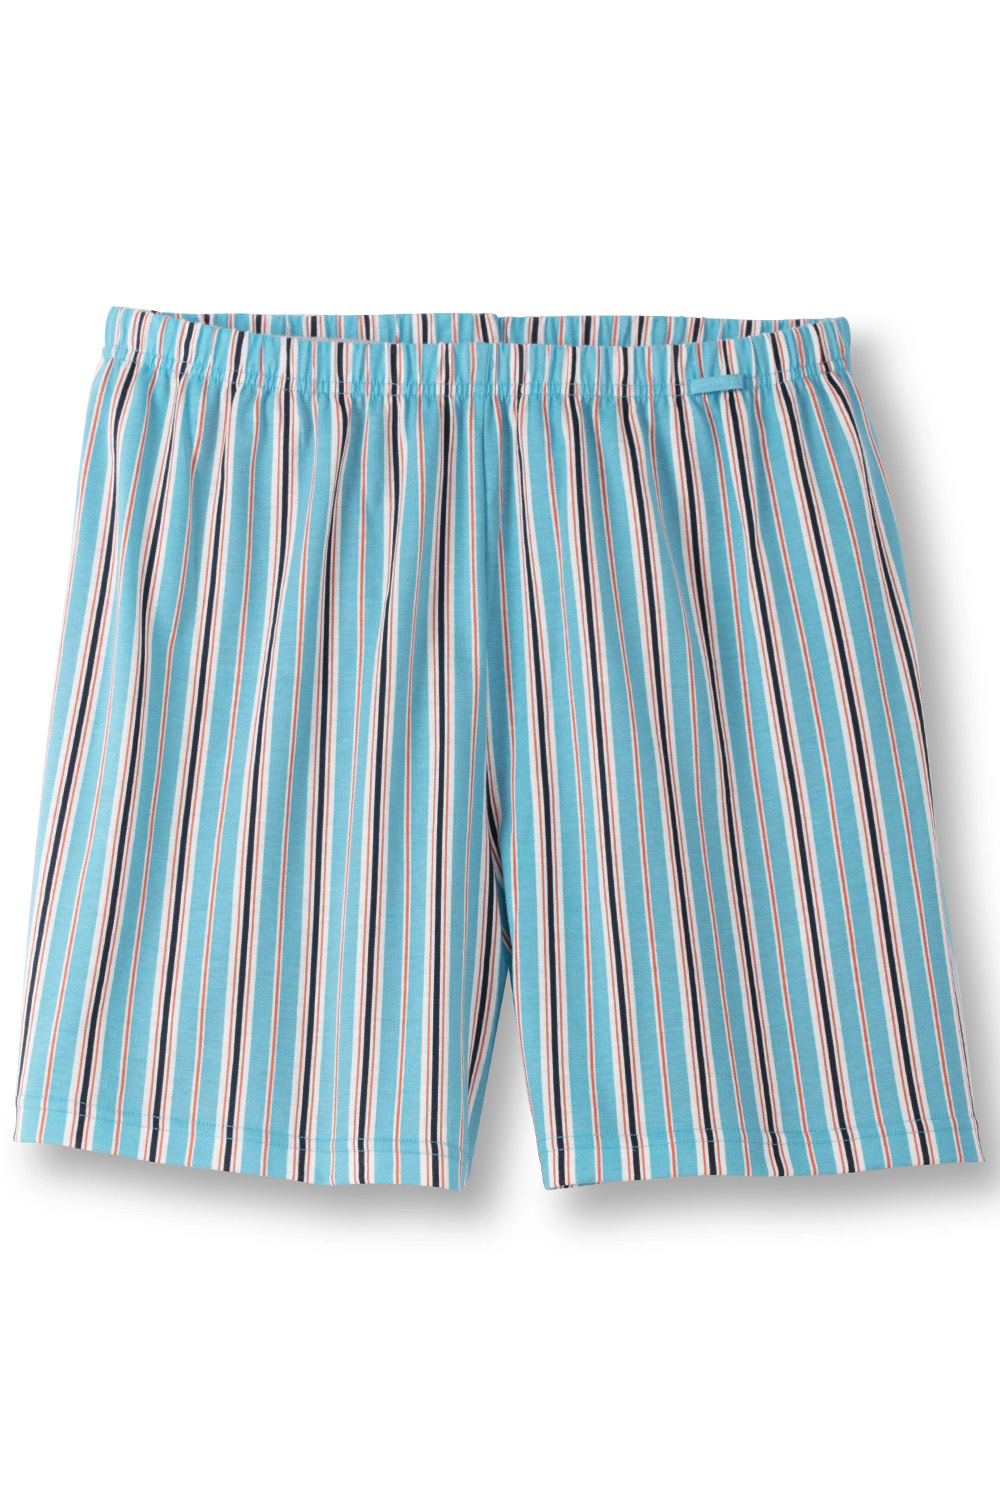 Calida Boxer Shorts blue Prints S mehrfarbig